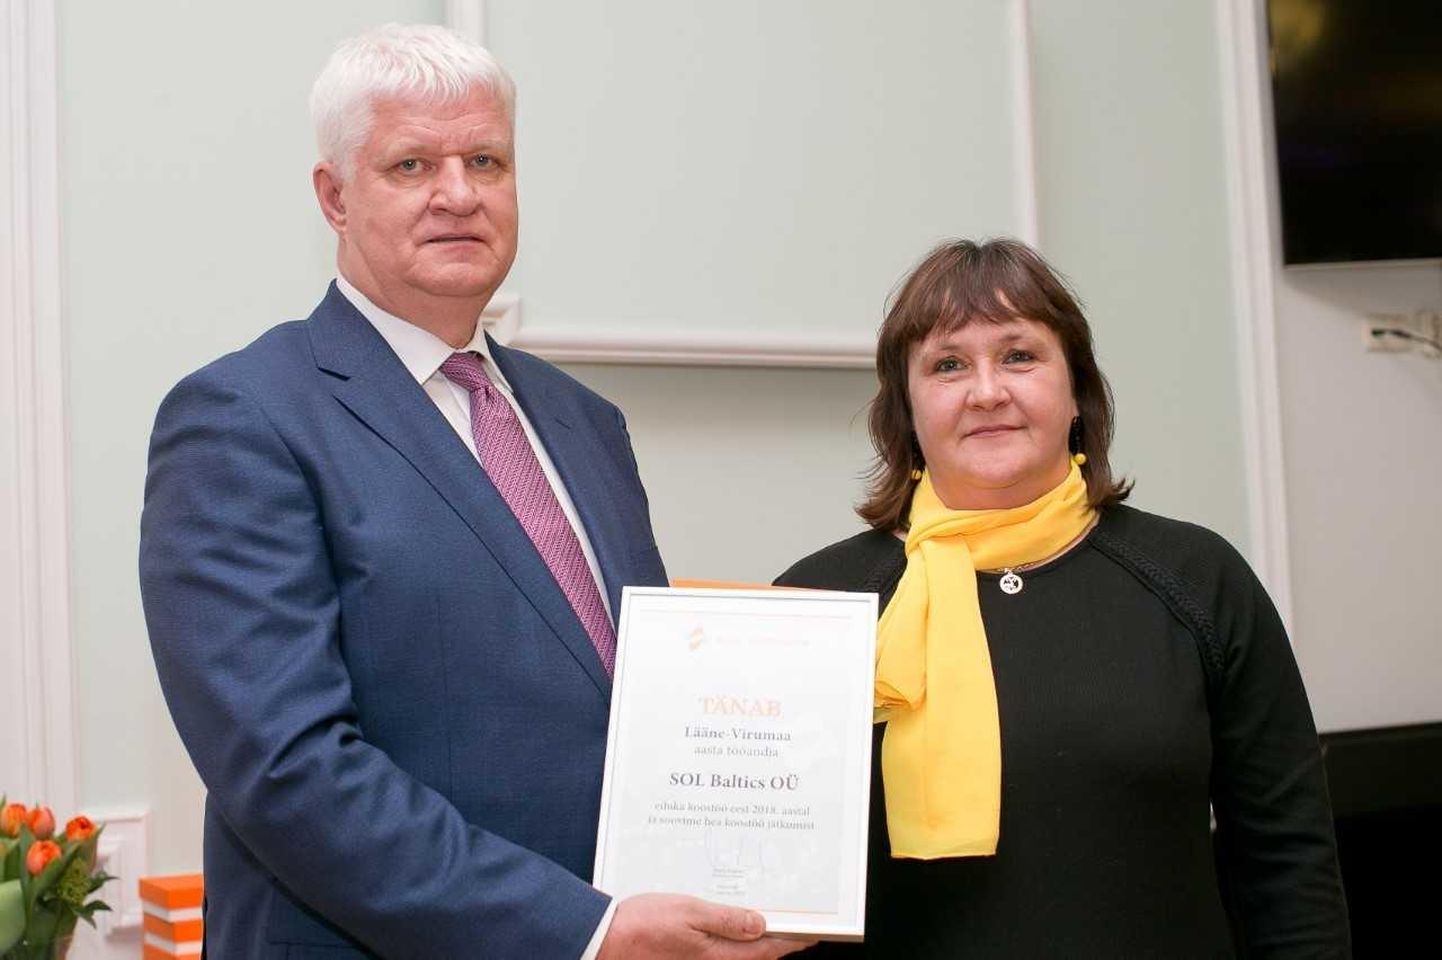 Lääne-Virumaa 2018. aasta tööandja on SOL Baltics OÜ.